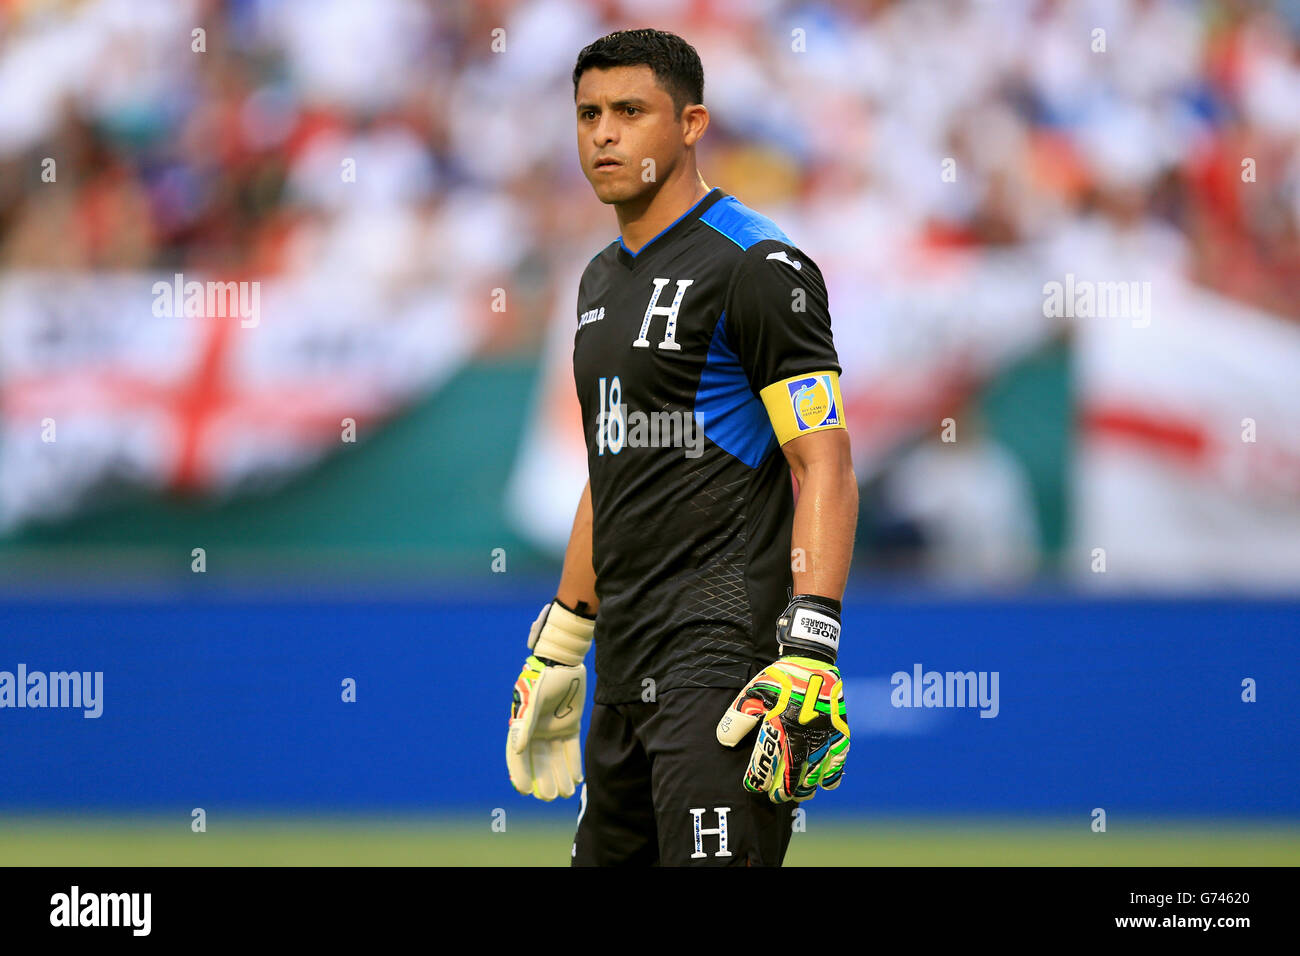 Soccer - FIFA World Cup 2014 - Miami Training Camp - England v Honduras - Sun Life Stadium. Noel Valladares, Honduras goalkeeper Stock Photo